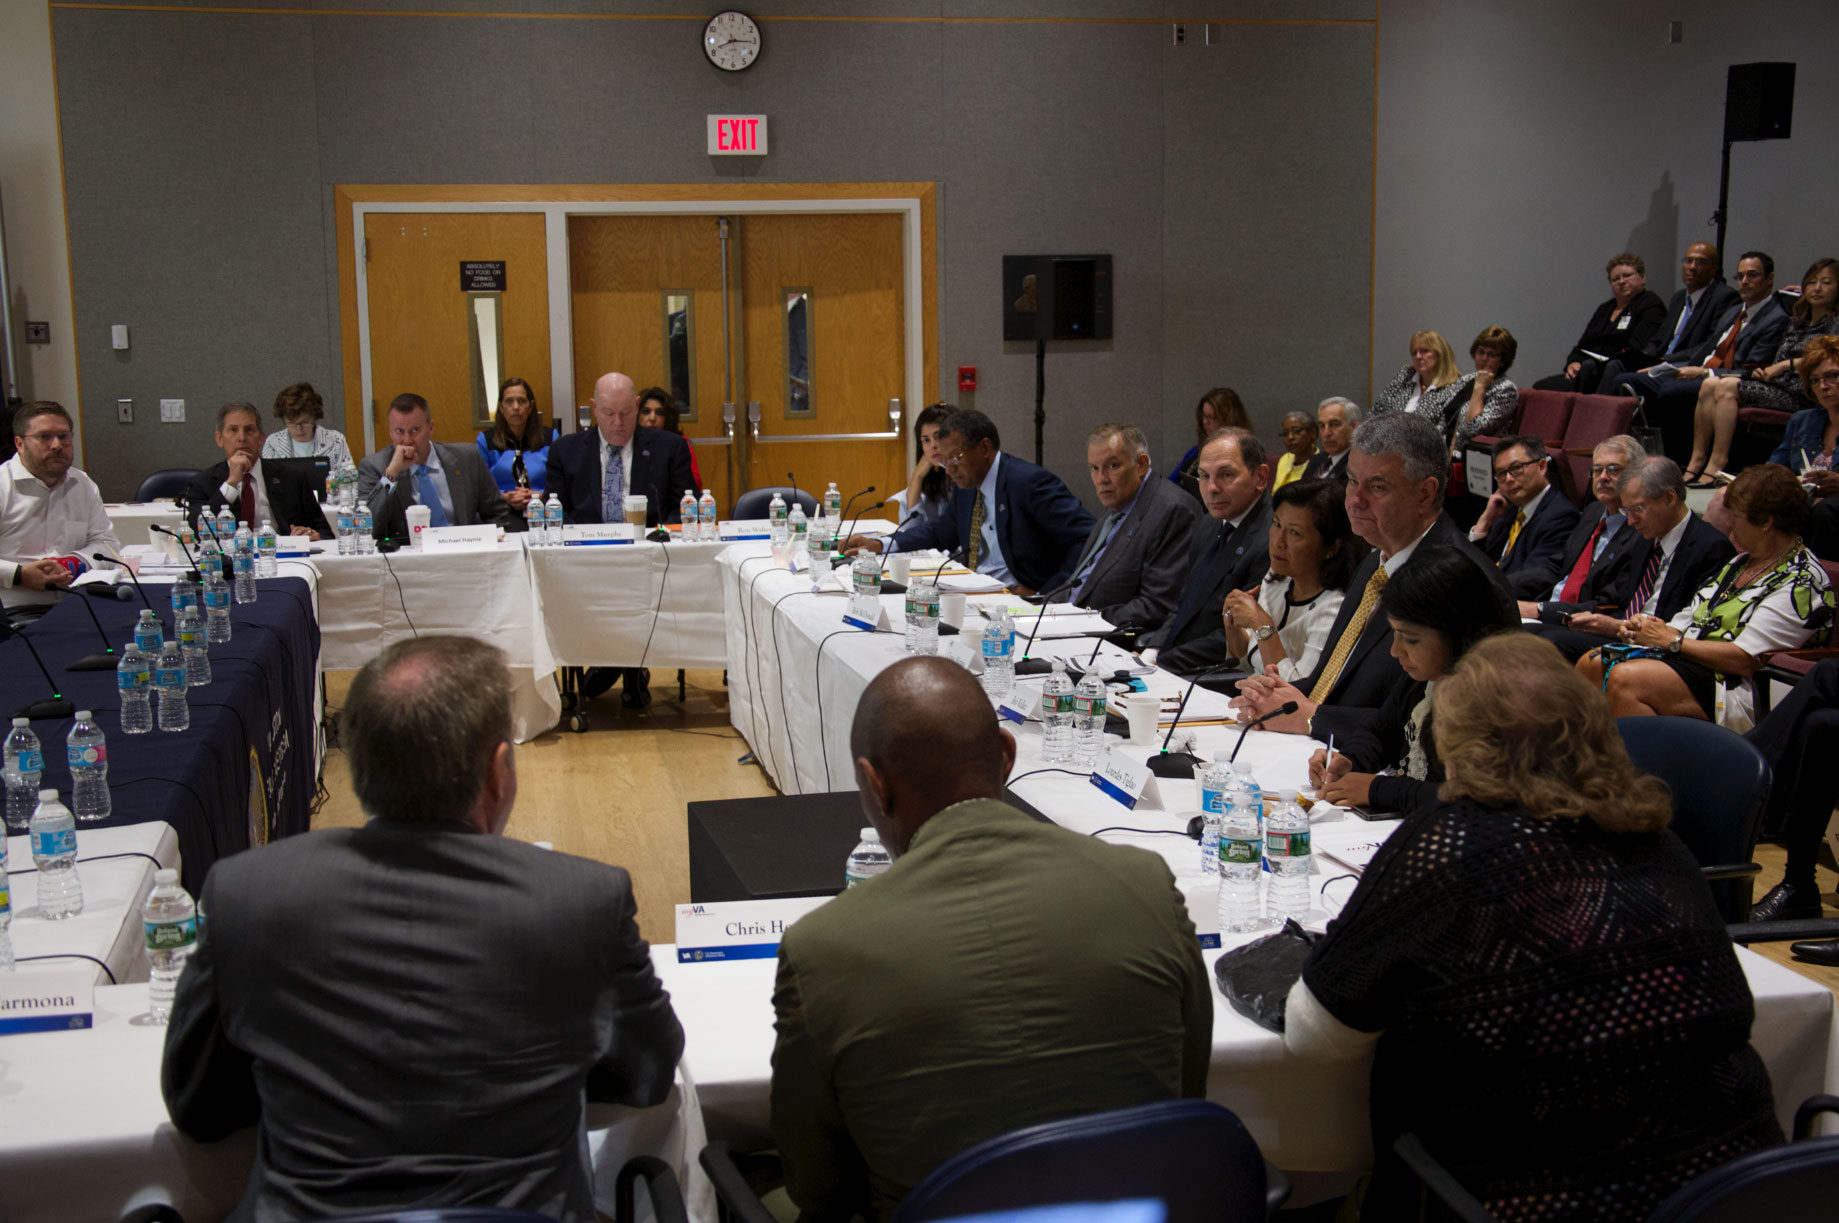 MyVA Advisory Committee talks progress, future of VA - VA News